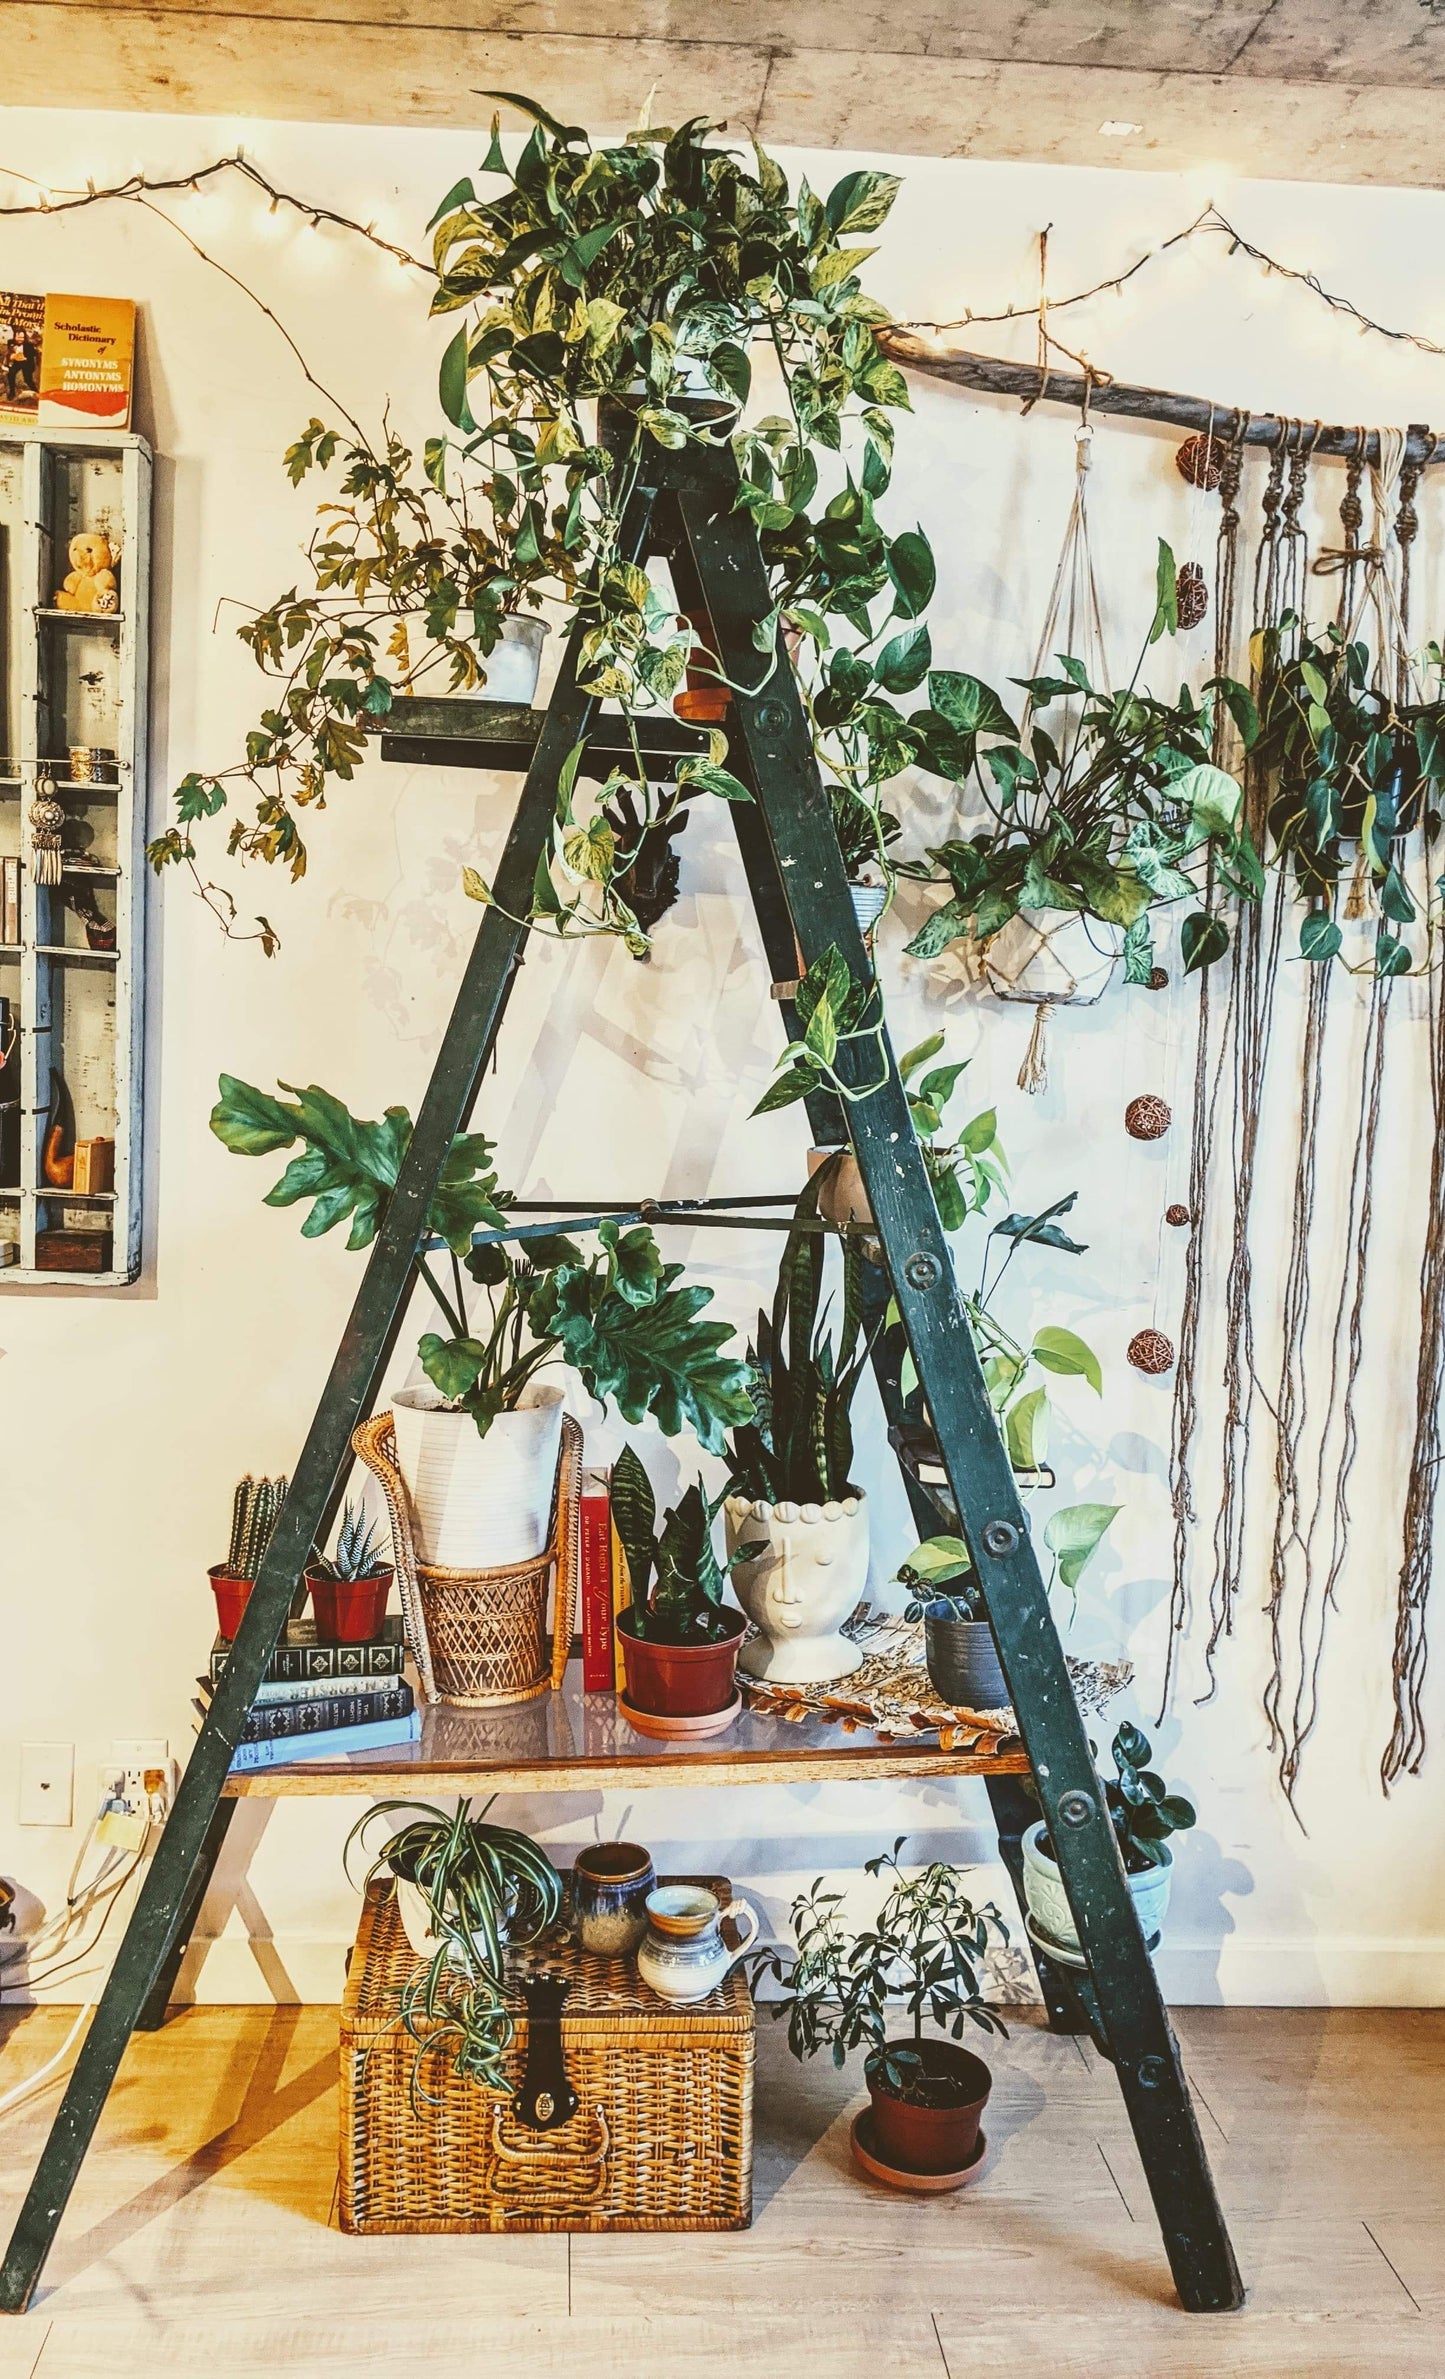 The Forest Green Ladder Shelf